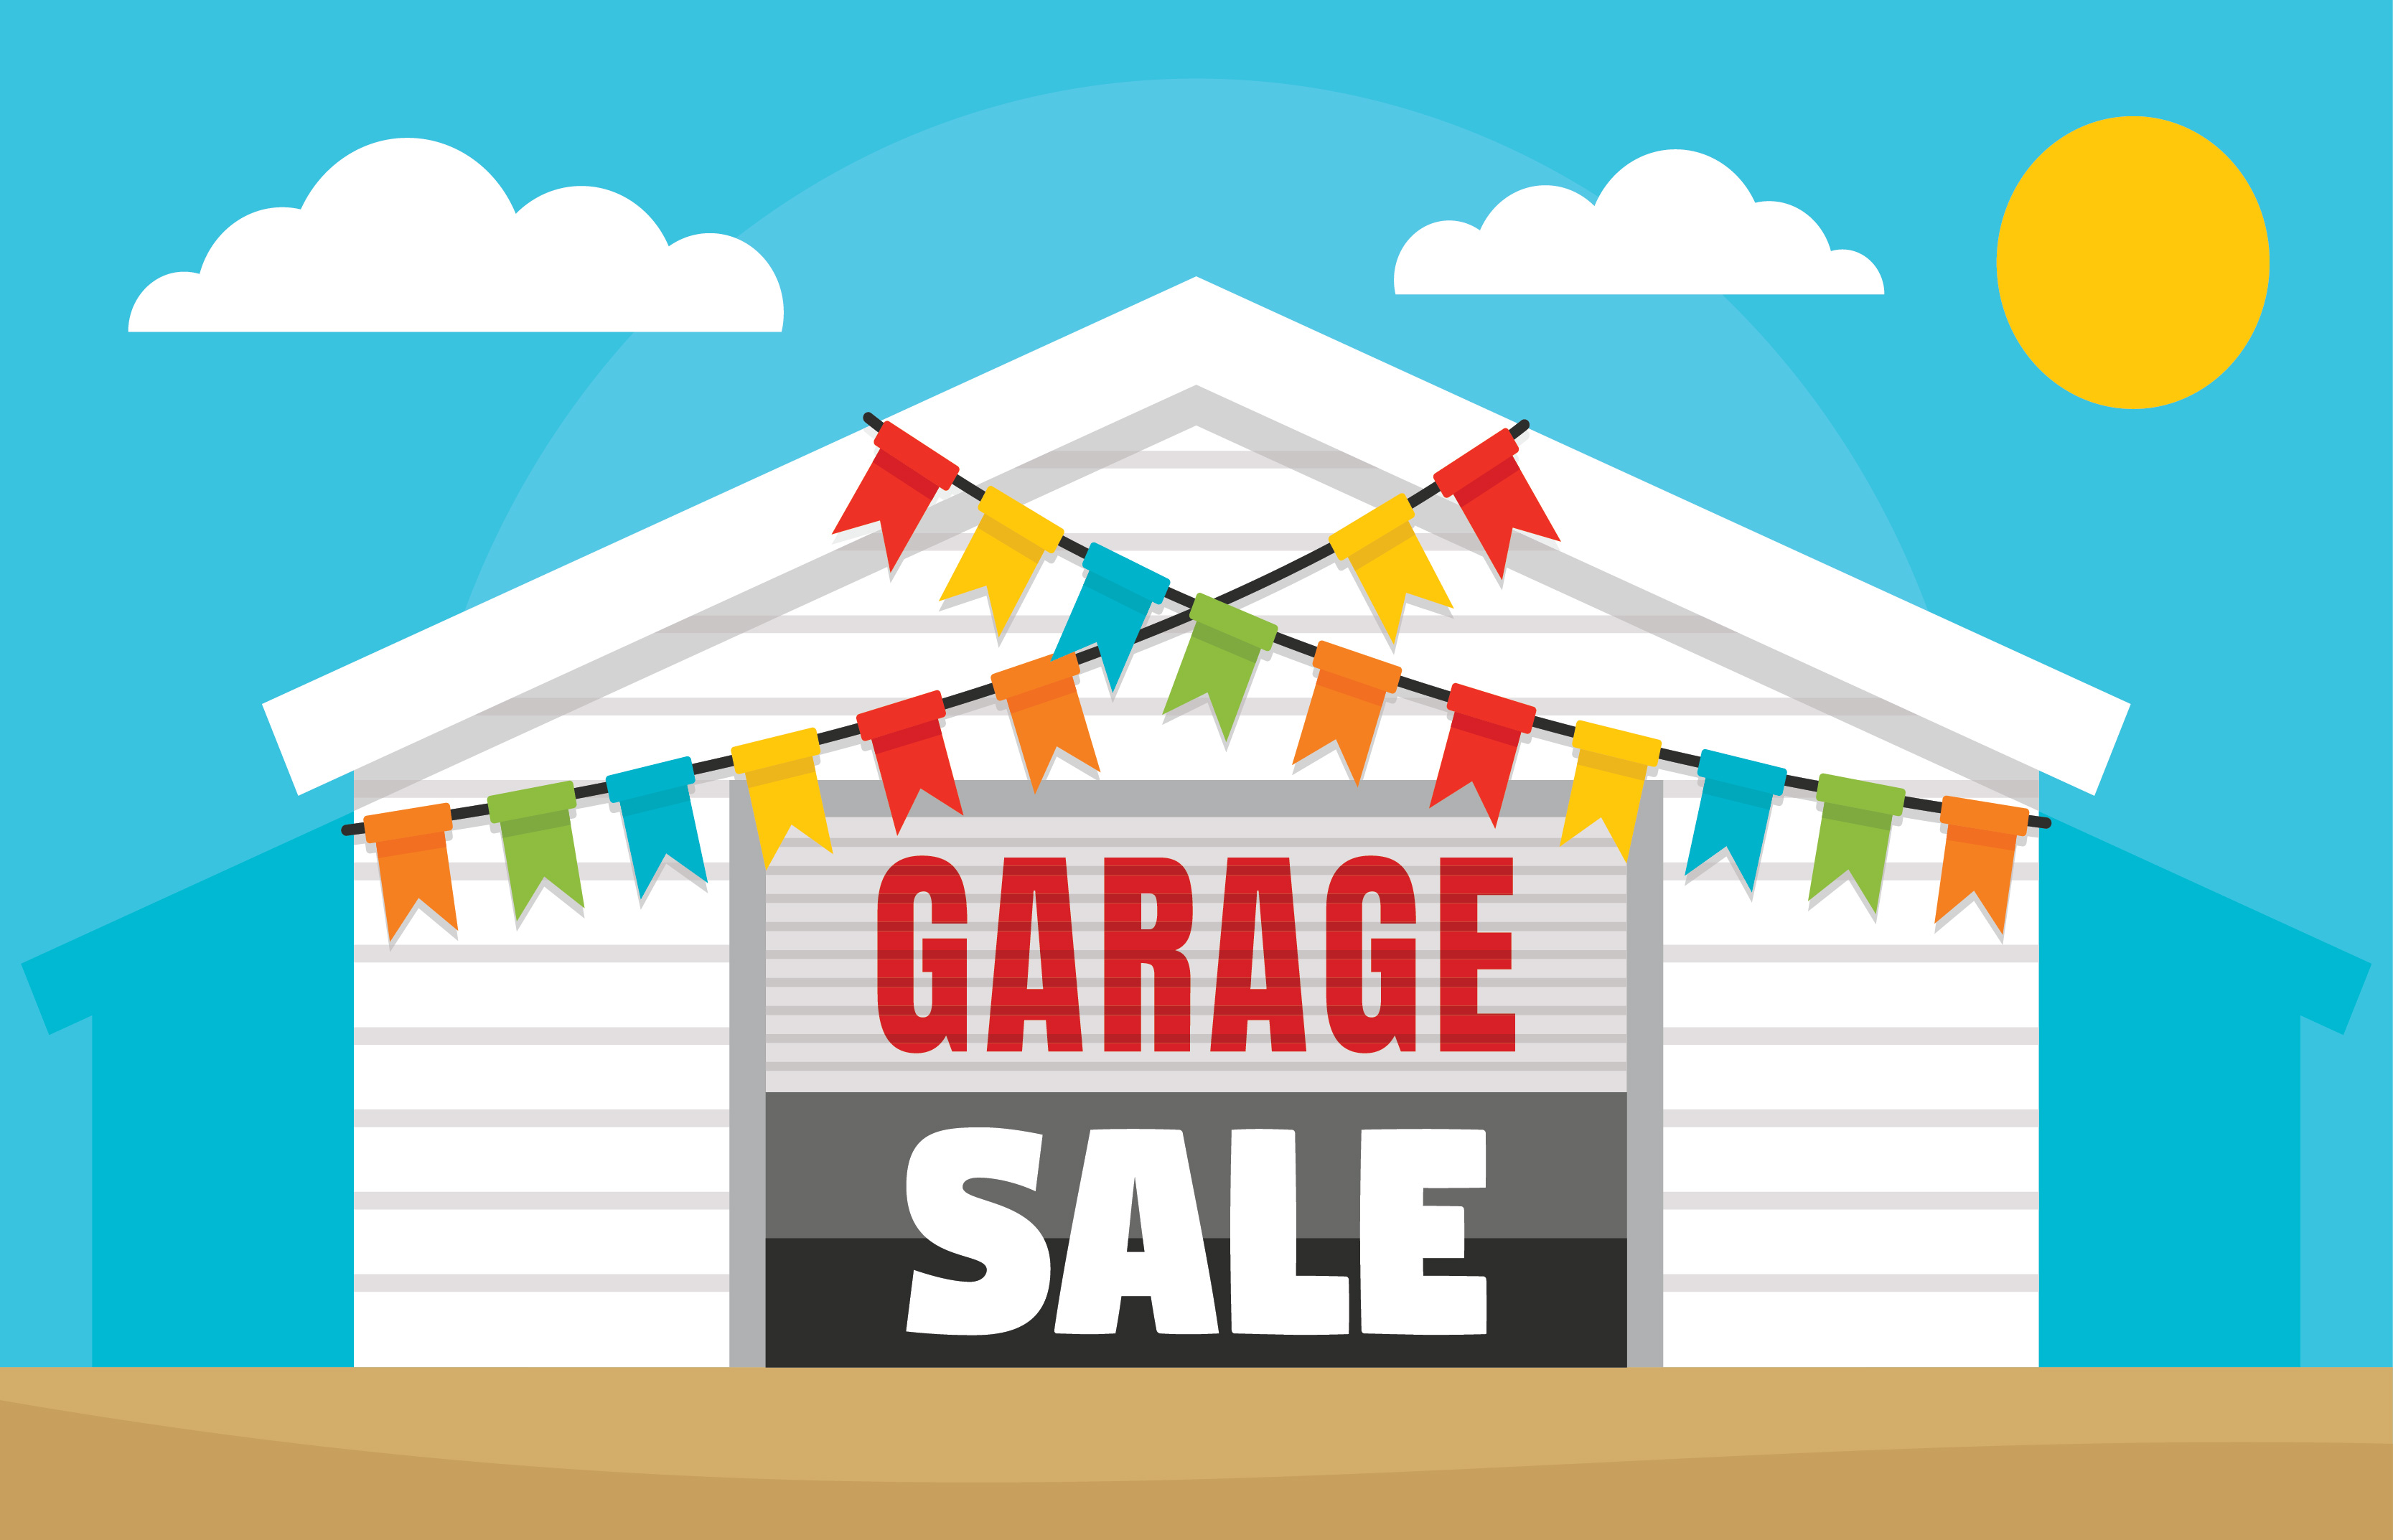 Easton Commons Community Garage Sale Set for October 21